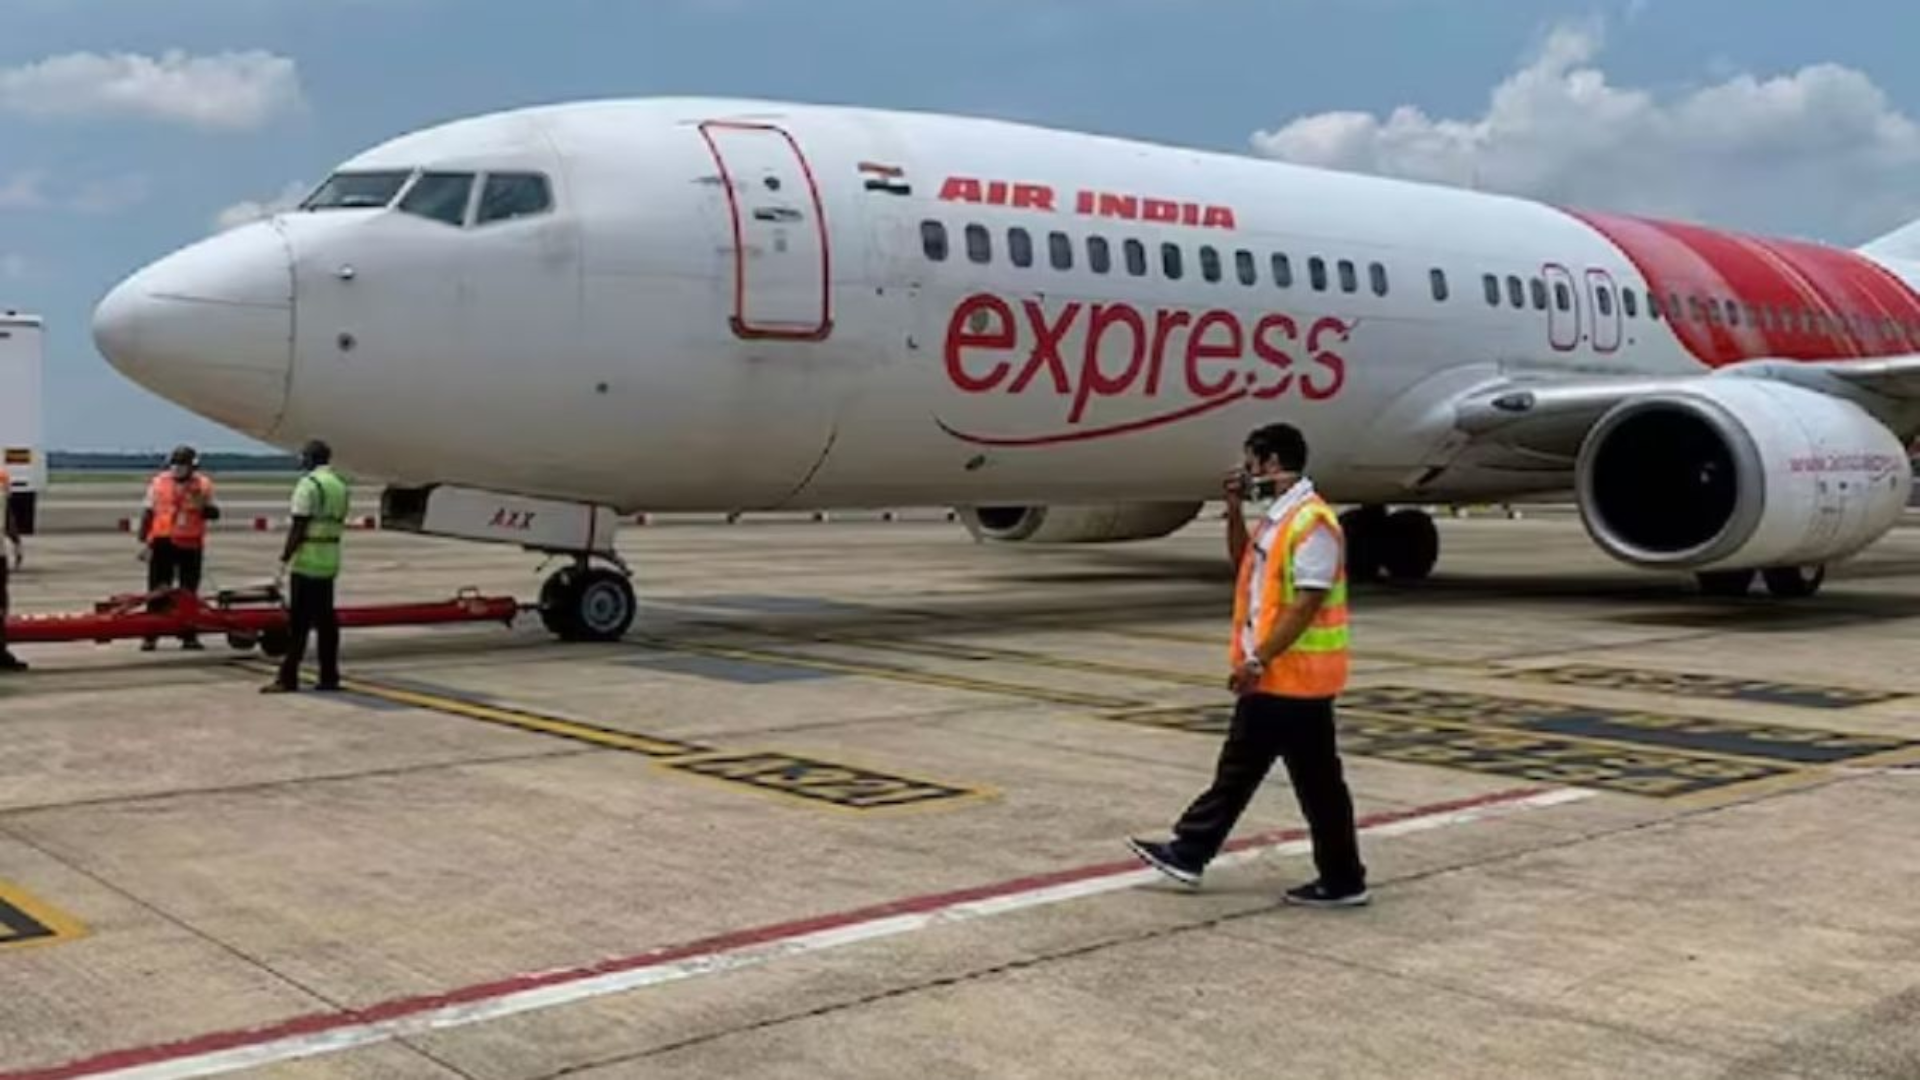 Air India Express Dismisses 30 Cabin Crew Amid Flight Disruptions; Union Accuses Airline of Mismanagement